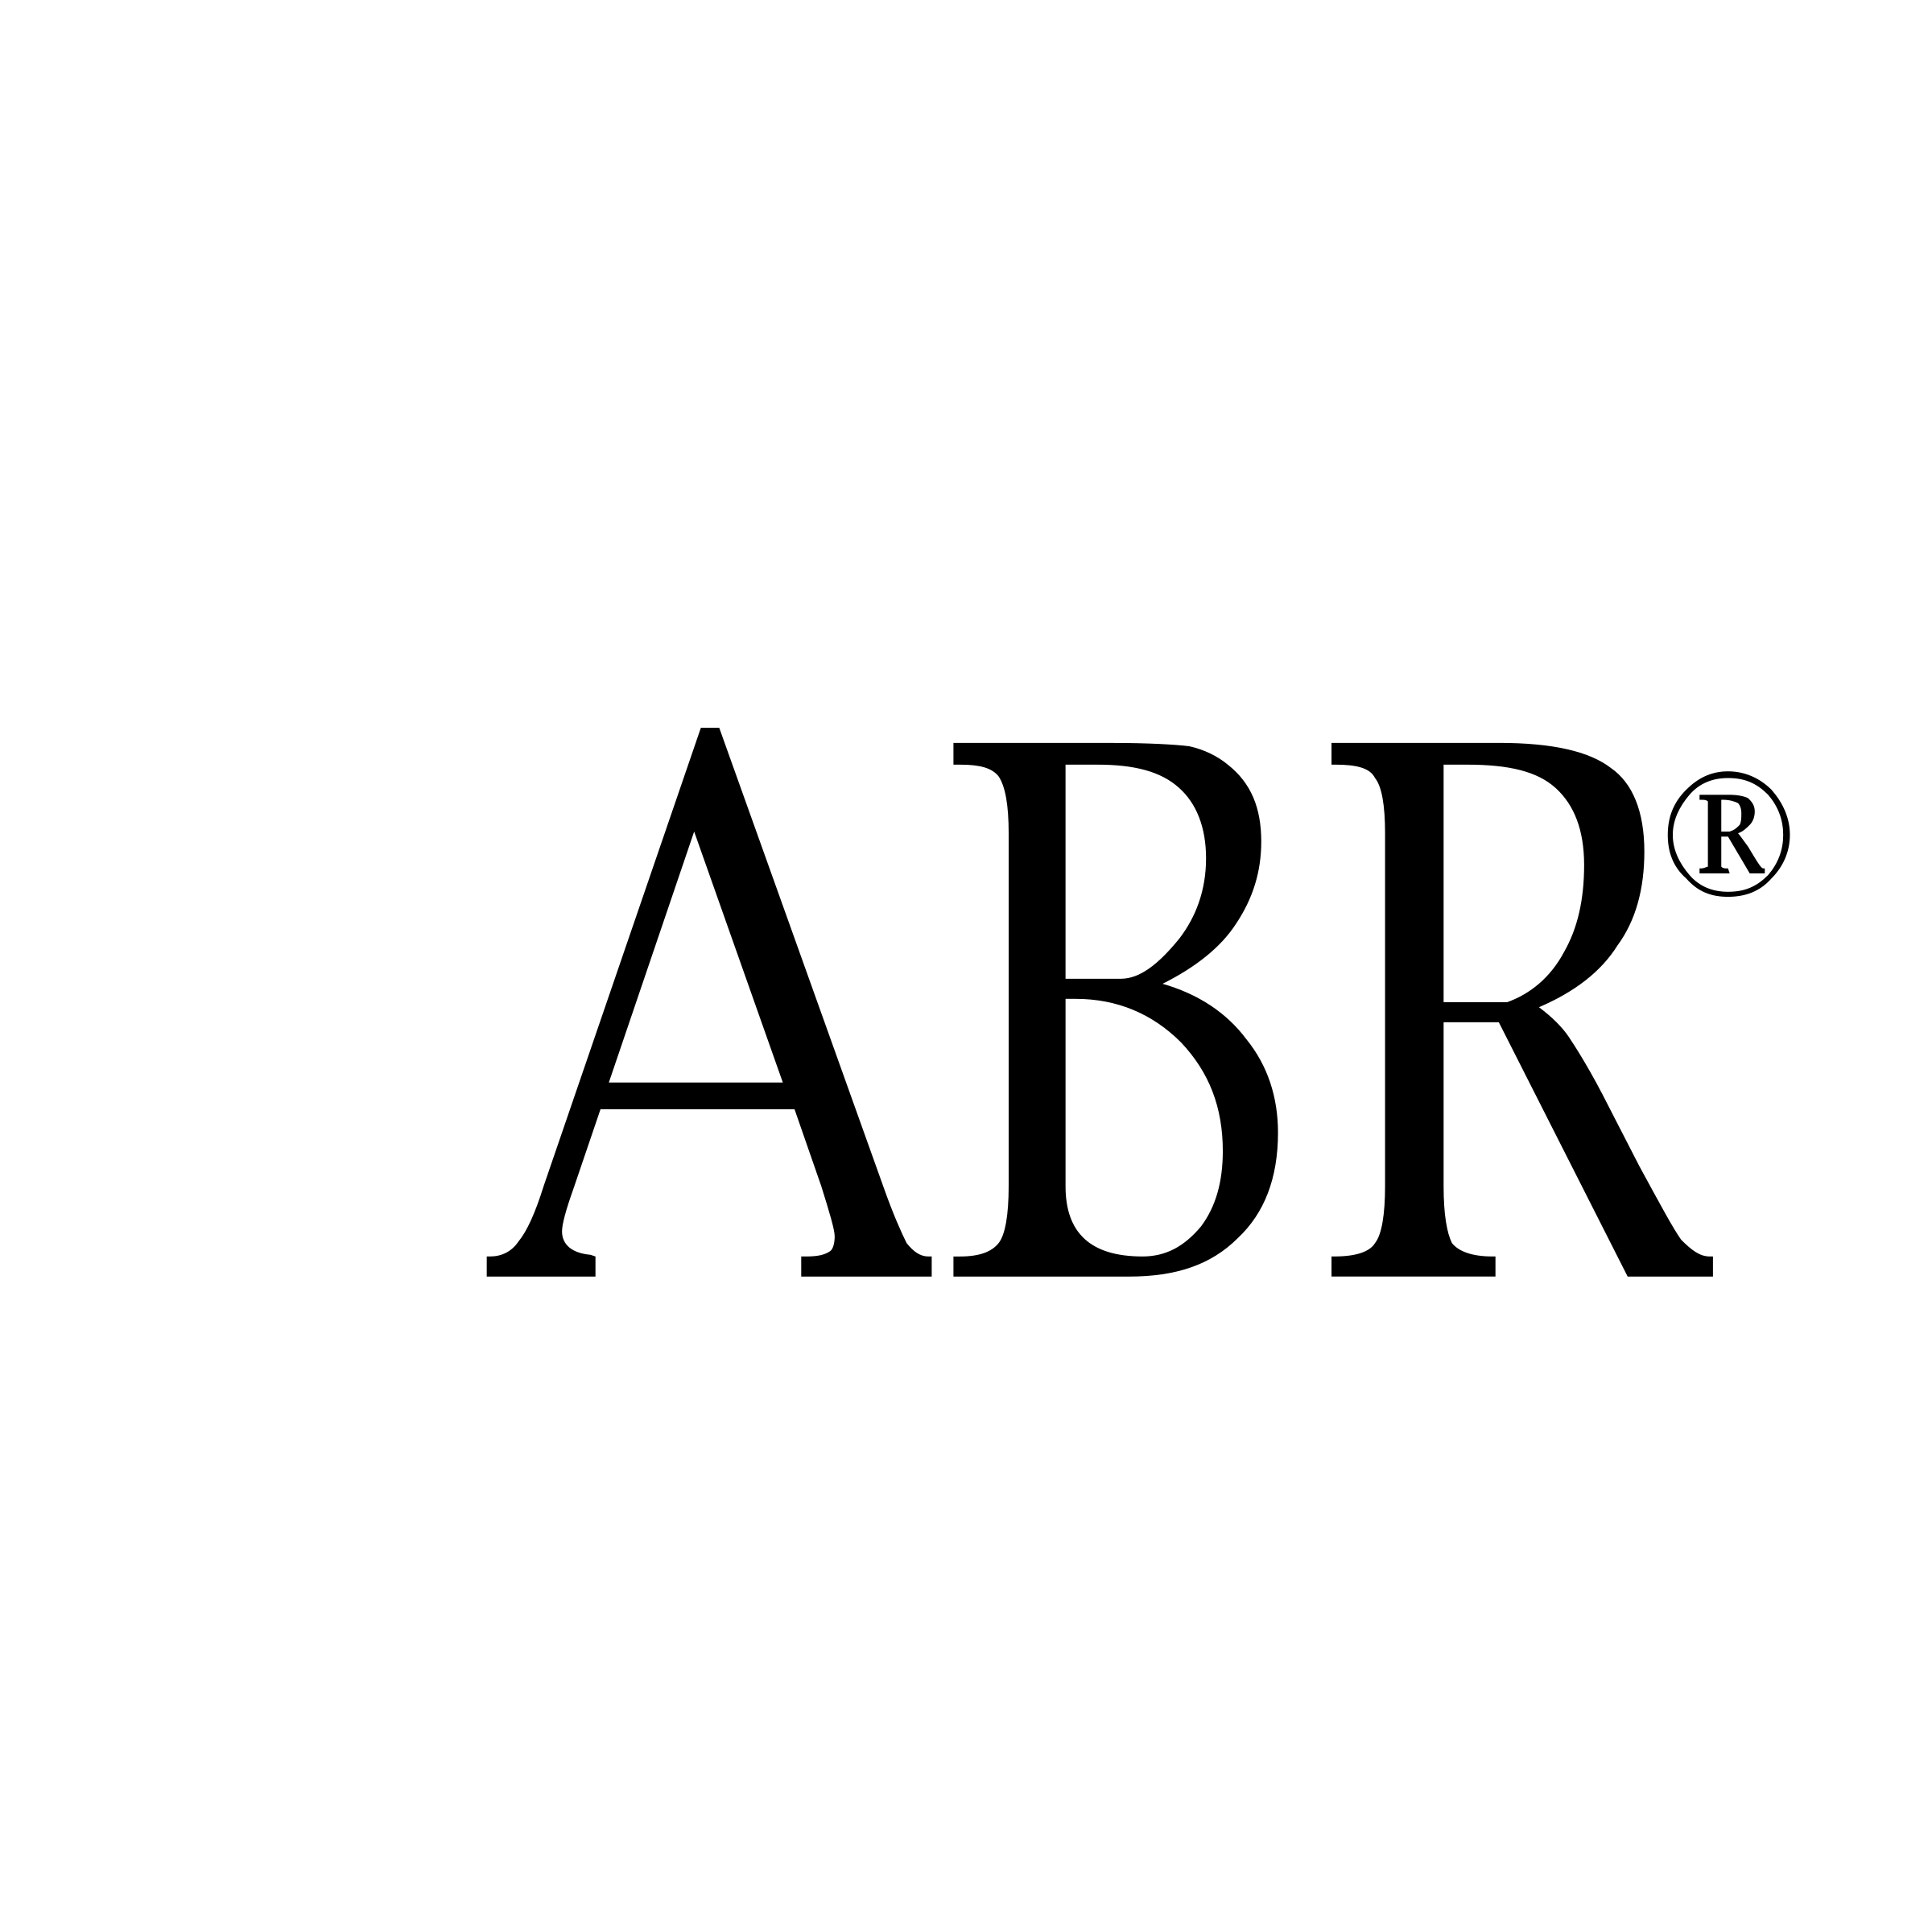 ABR Logo - ABR Logo PNG Transparent & SVG Vector